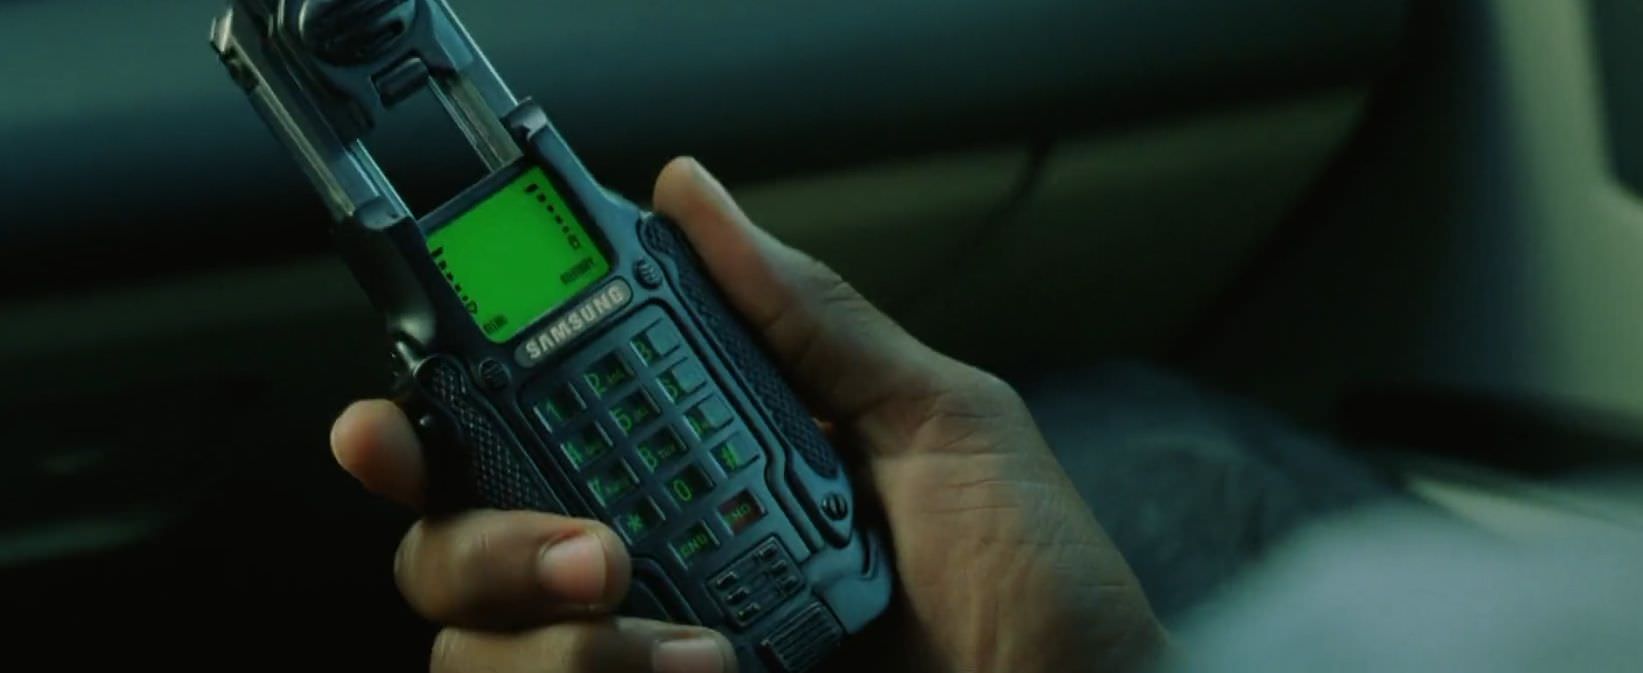 Телефон из матрицы. Samsung SPH-n270 Matrix Phone. Nokia 8110 Нео. Матрица Нео нокиа 8110. Телефон из матрицы Nokia 8110.